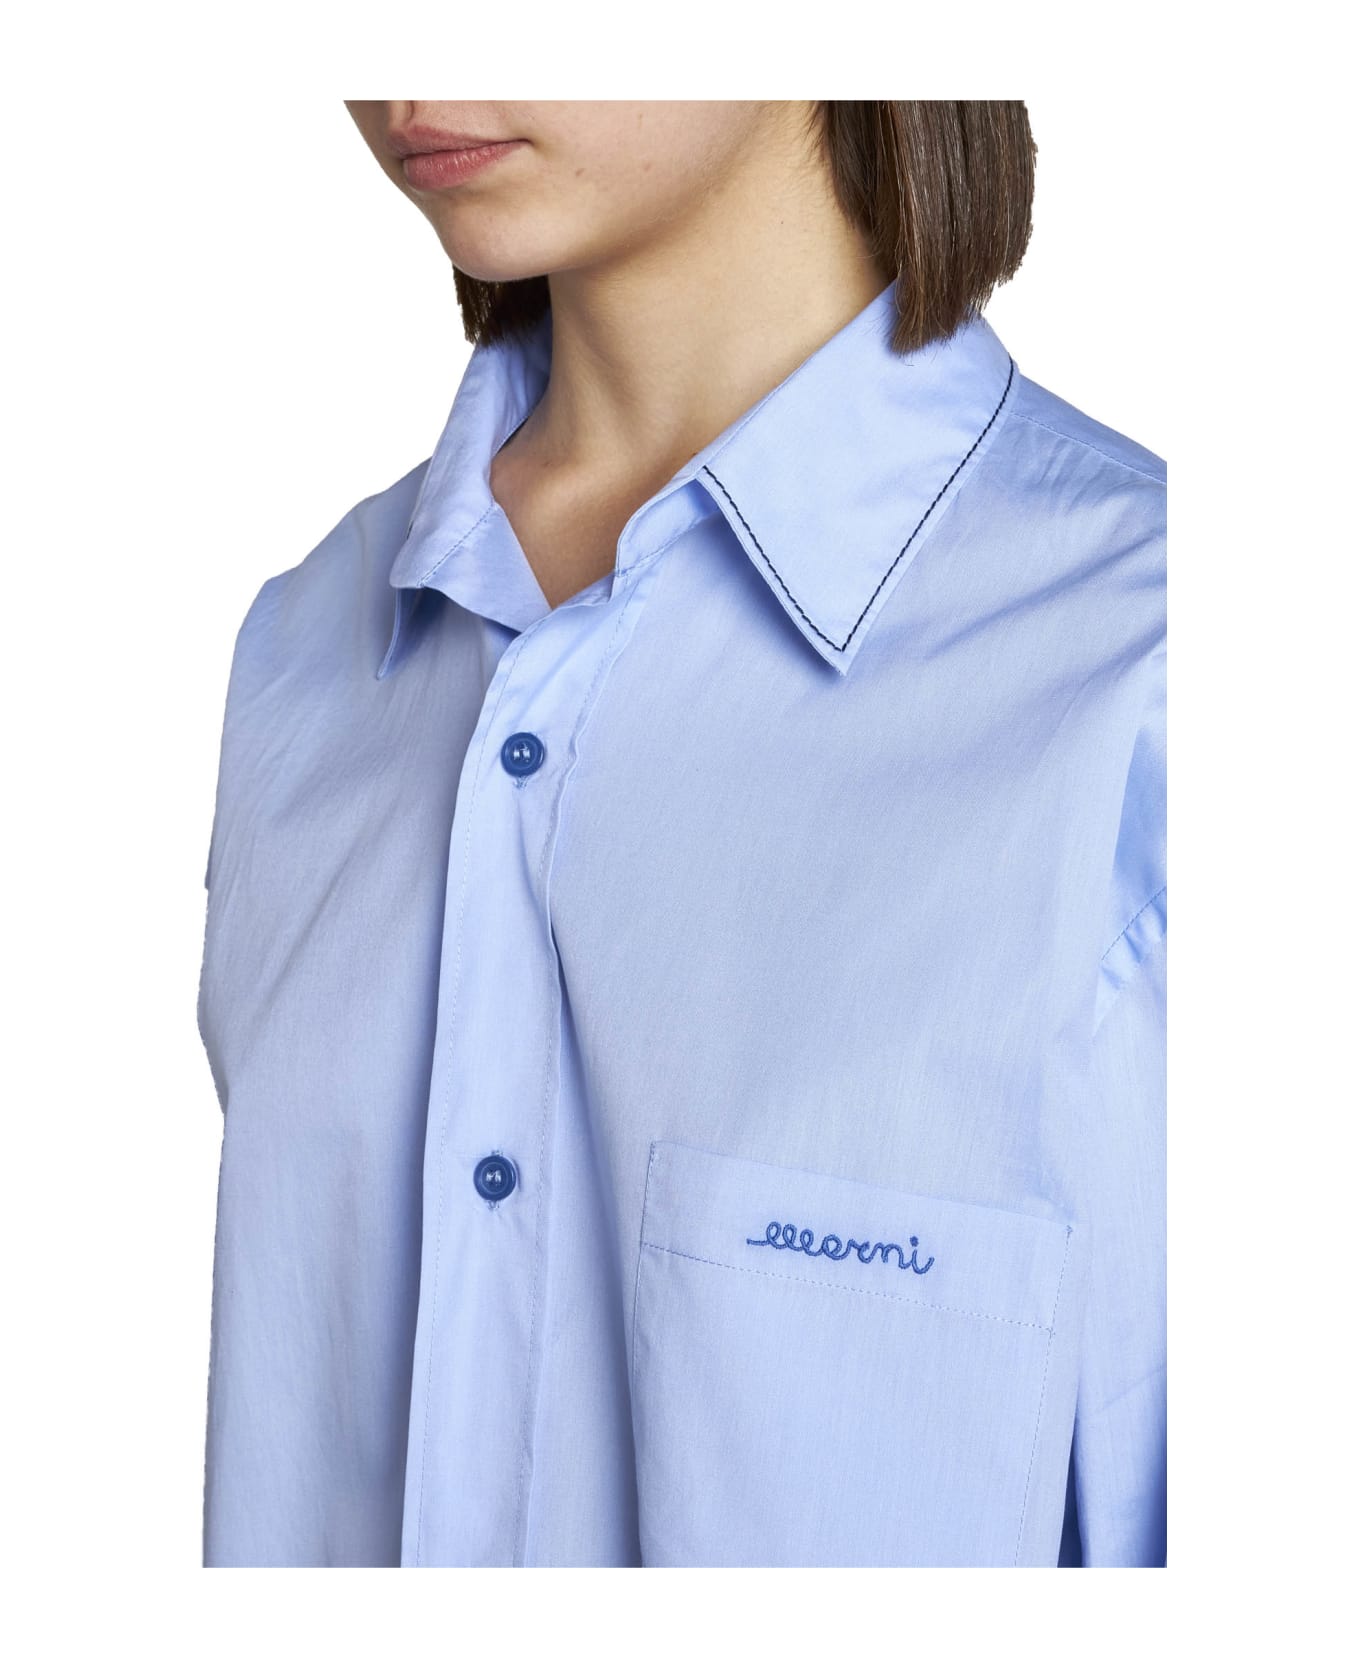 Marni Shirt - Azzurro シャツ